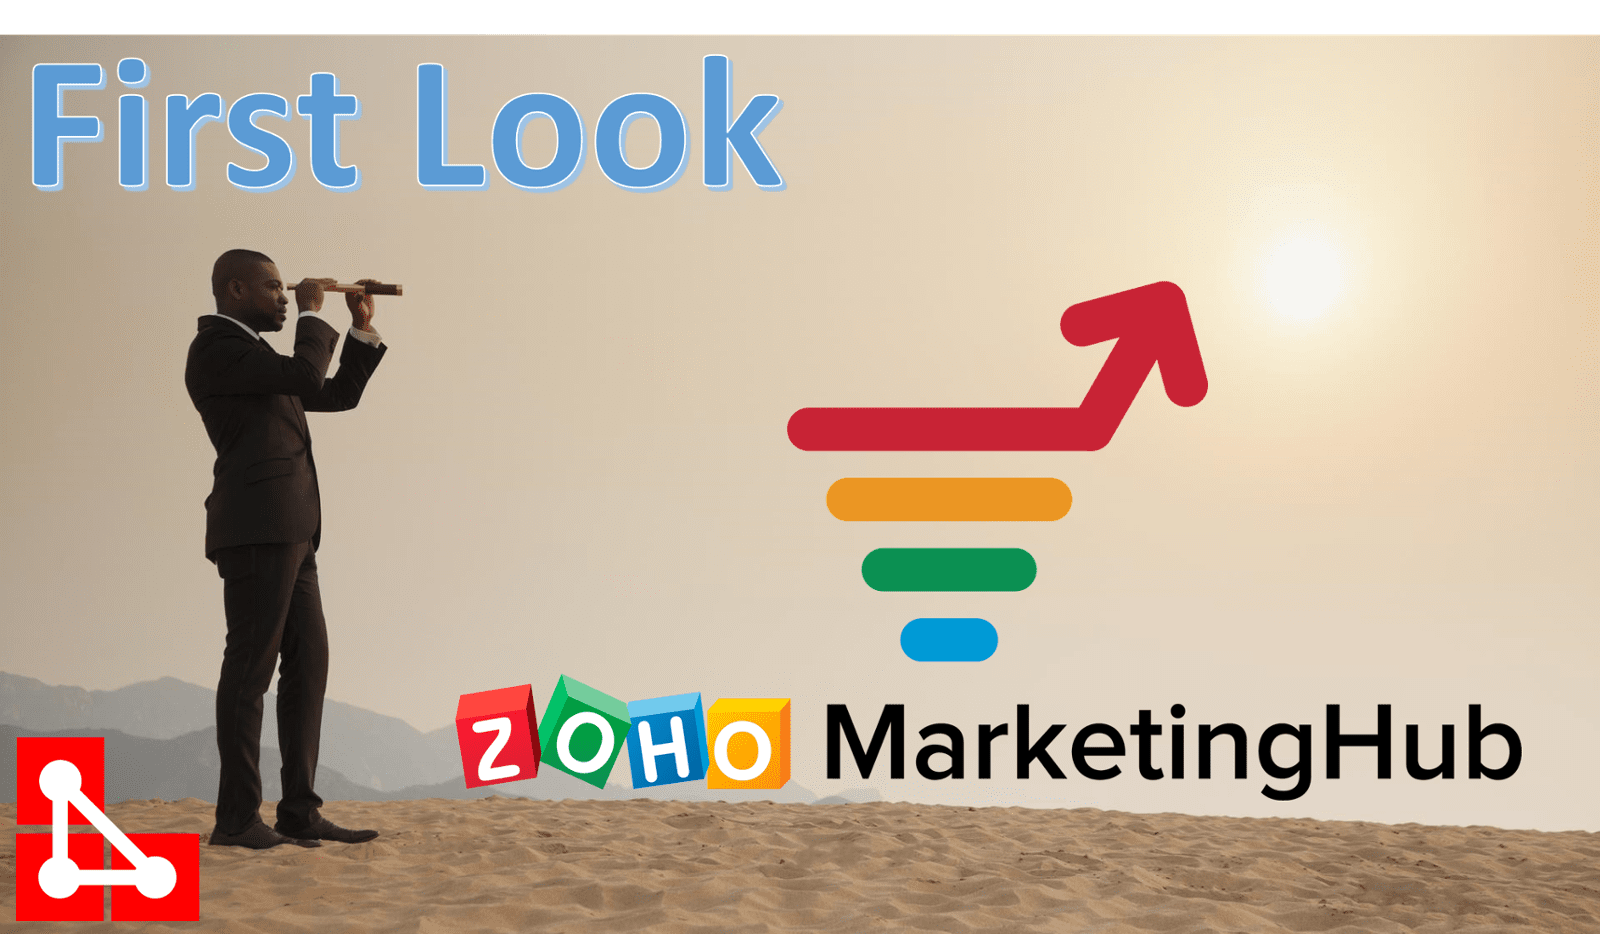 Zoho hits the spot with MarketingHub